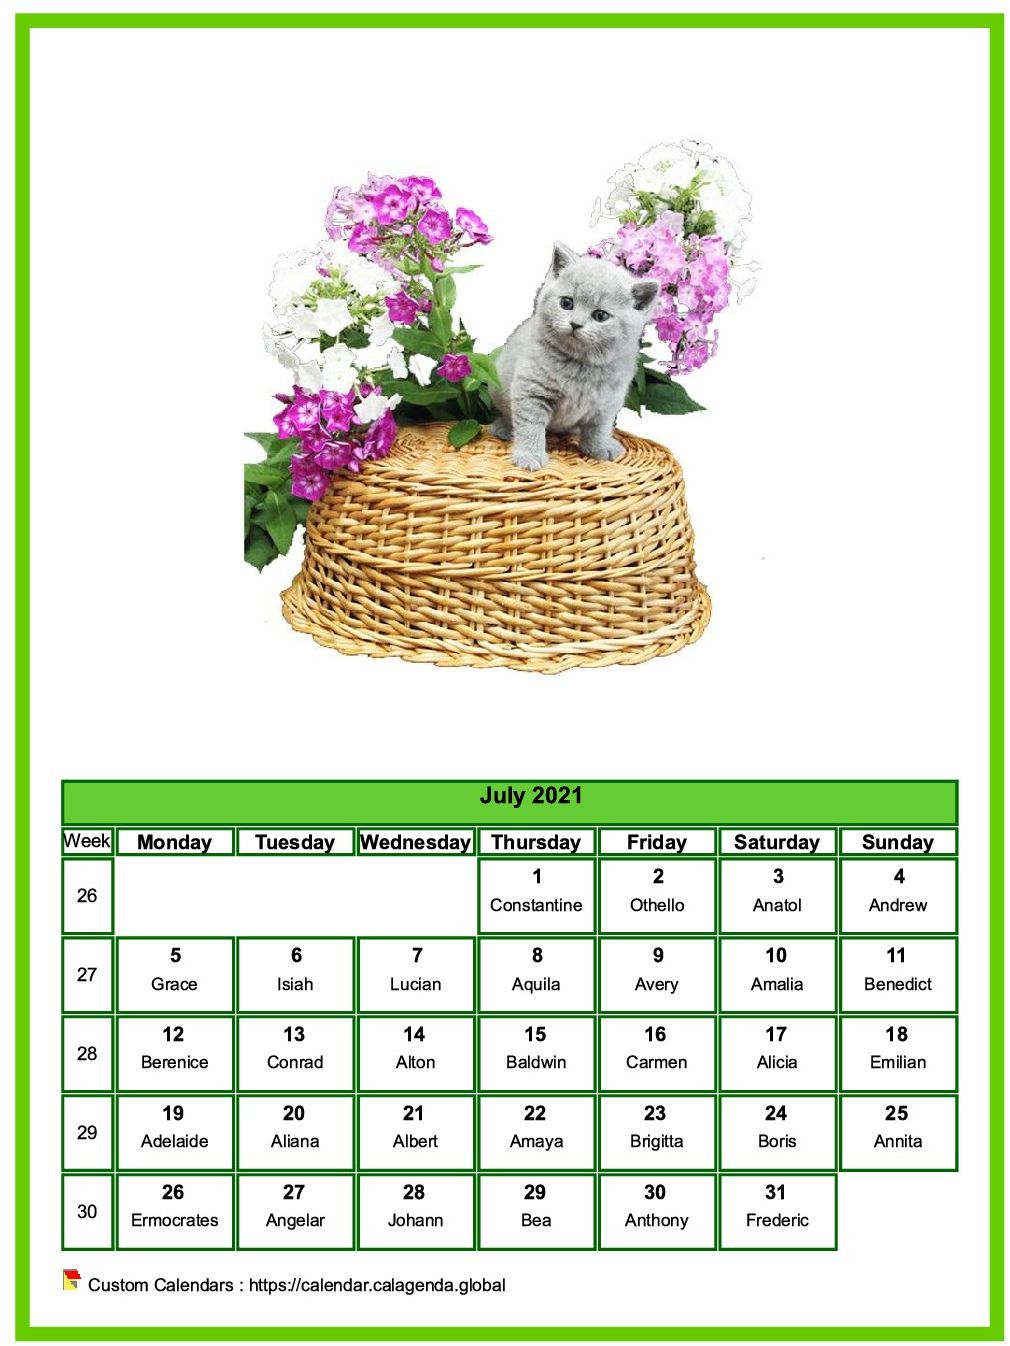 Calendar July 2021 cats